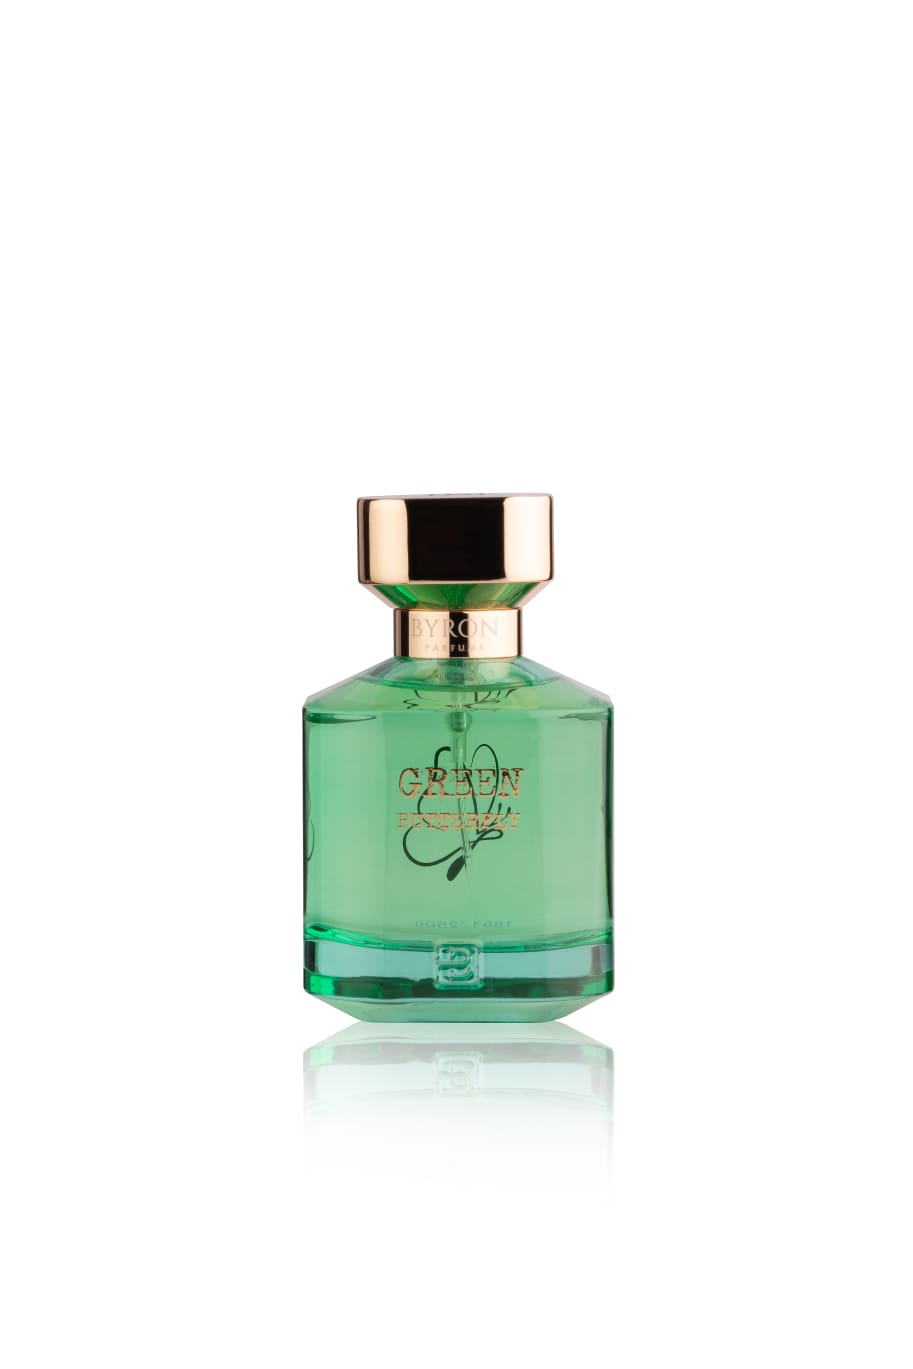 Byron Parfums Mula Mula Rouge Extreme Perfume Extrait de Parfum 50ml/1.7oz